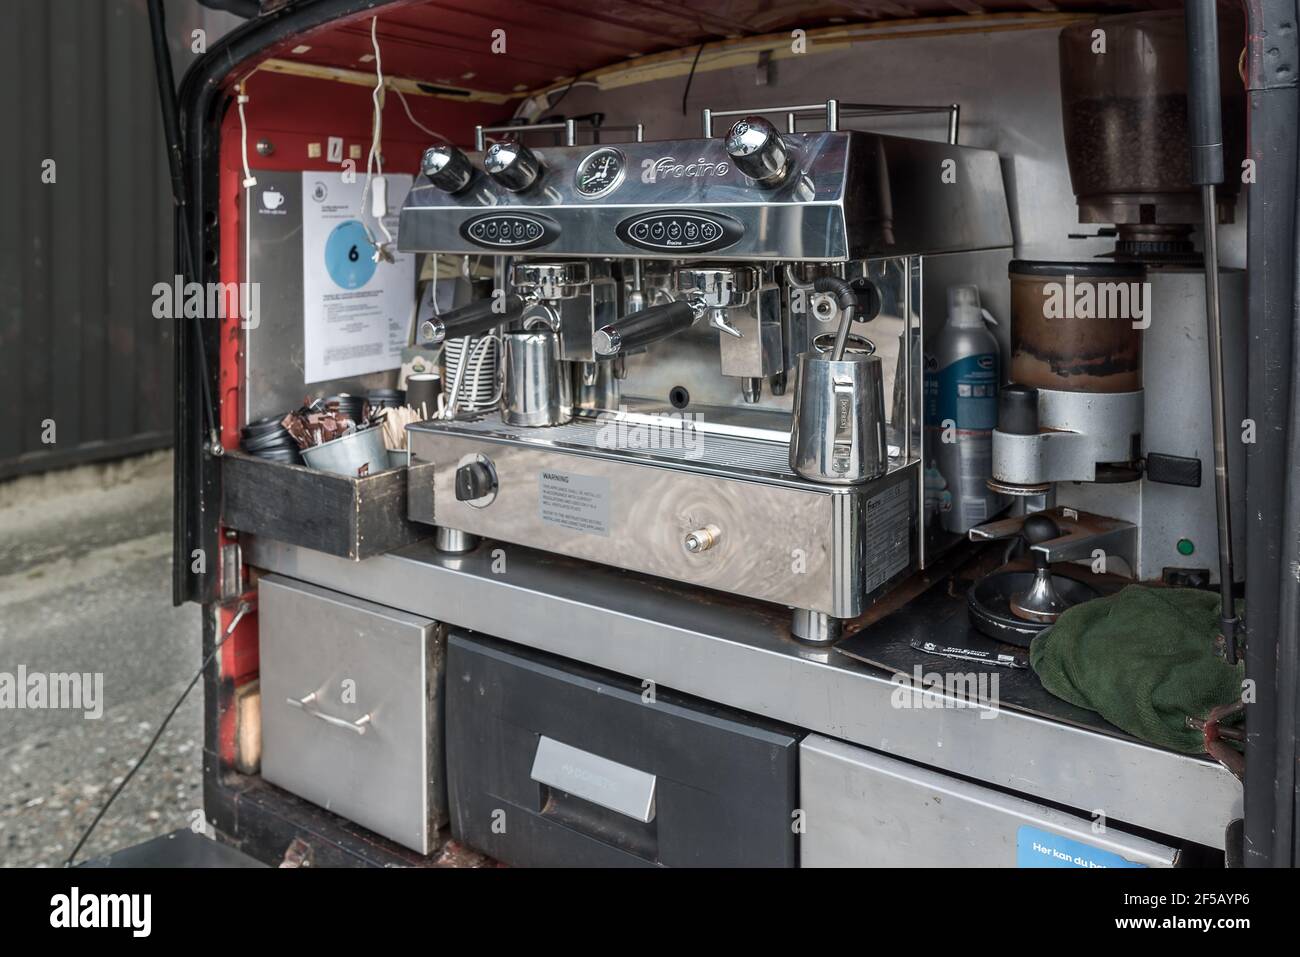 retro coffee shop in the back of a van, Copenhagen, 20, 2021 Stock Photo - Alamy